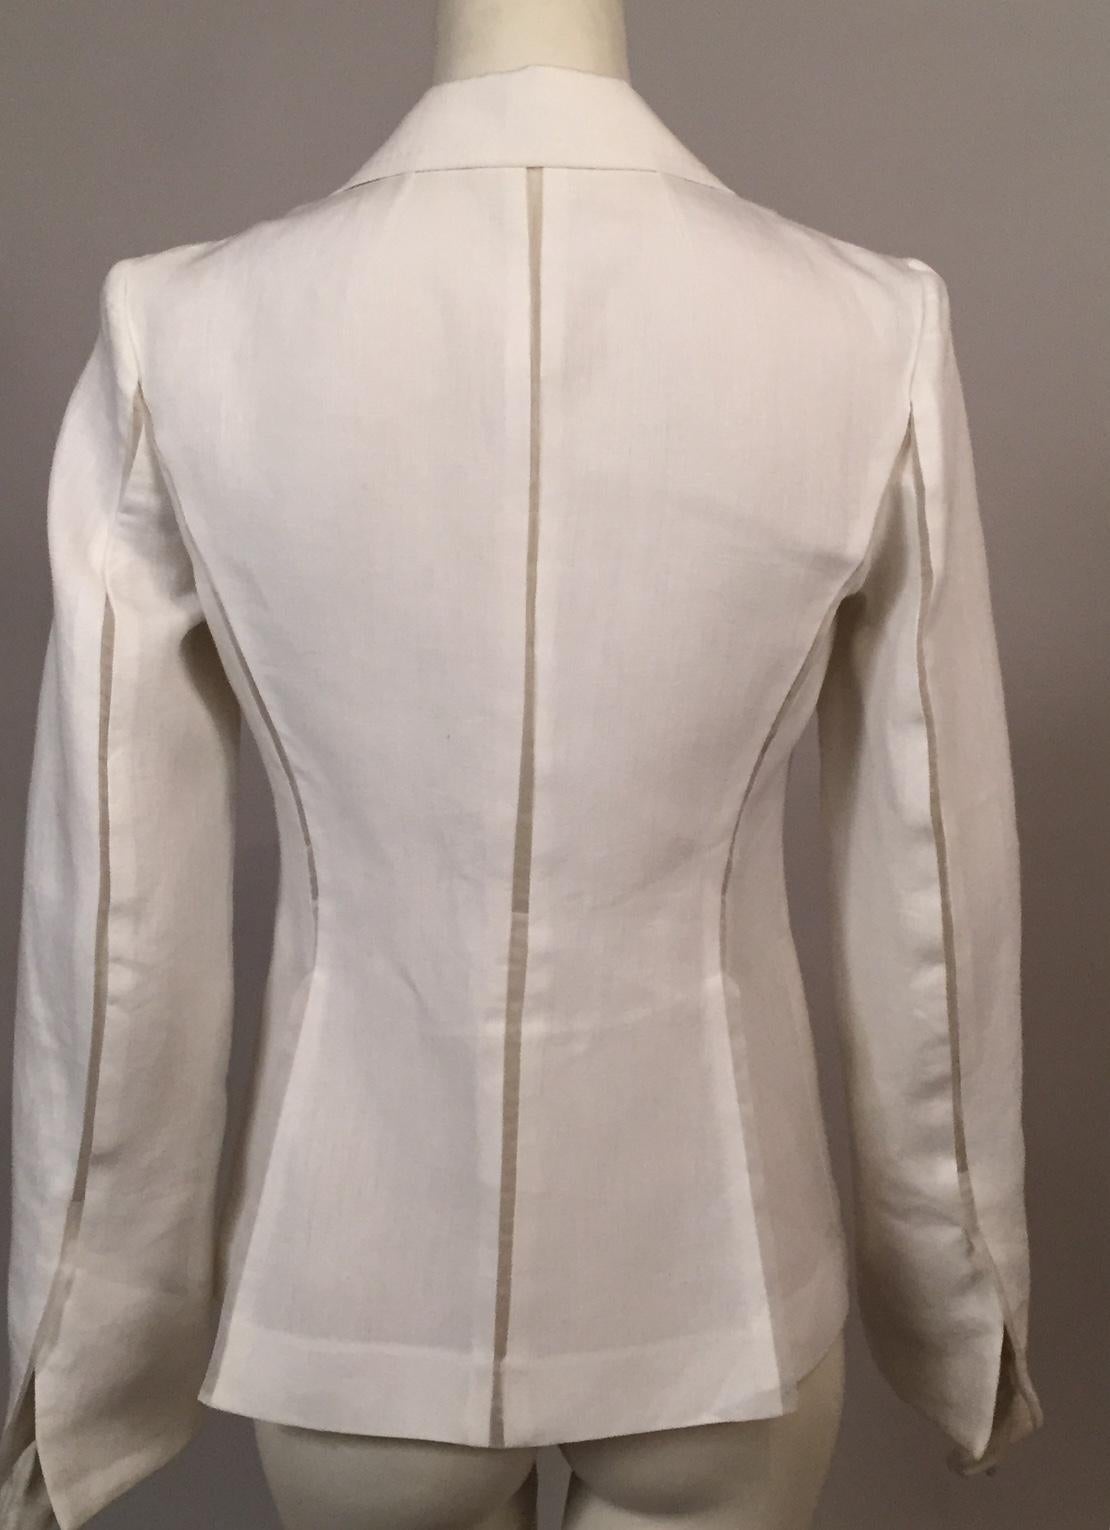 Gianfranco Ferre White Linen Jacket with Sheer Silk Organza Panels 2